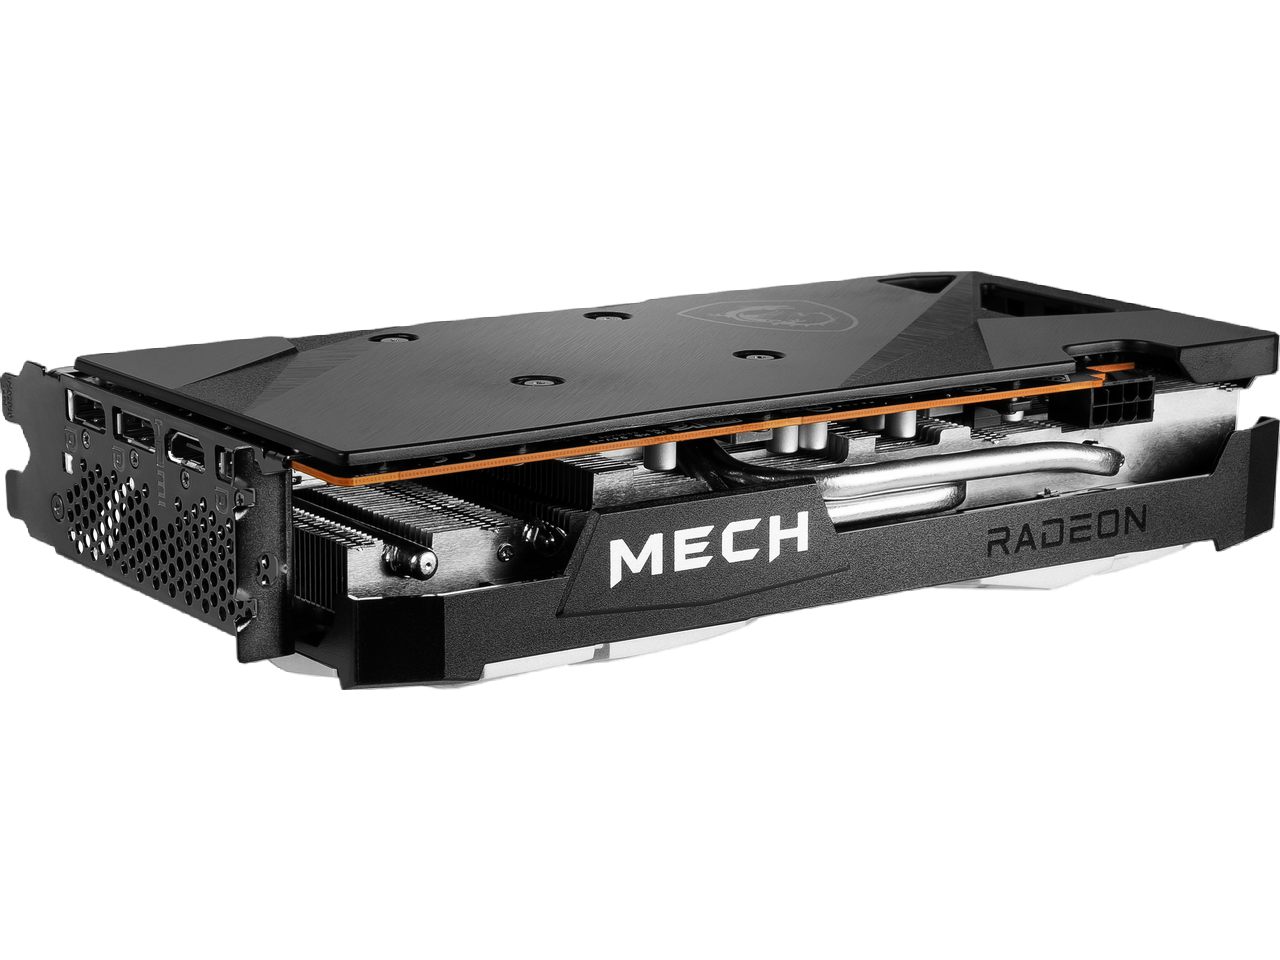 MSI Mech Radeon RX 6600 XT 8GB GDDR6 PCI Express 4.0 ATX Video Card RX 6600 XT MECH 2X 8G OC